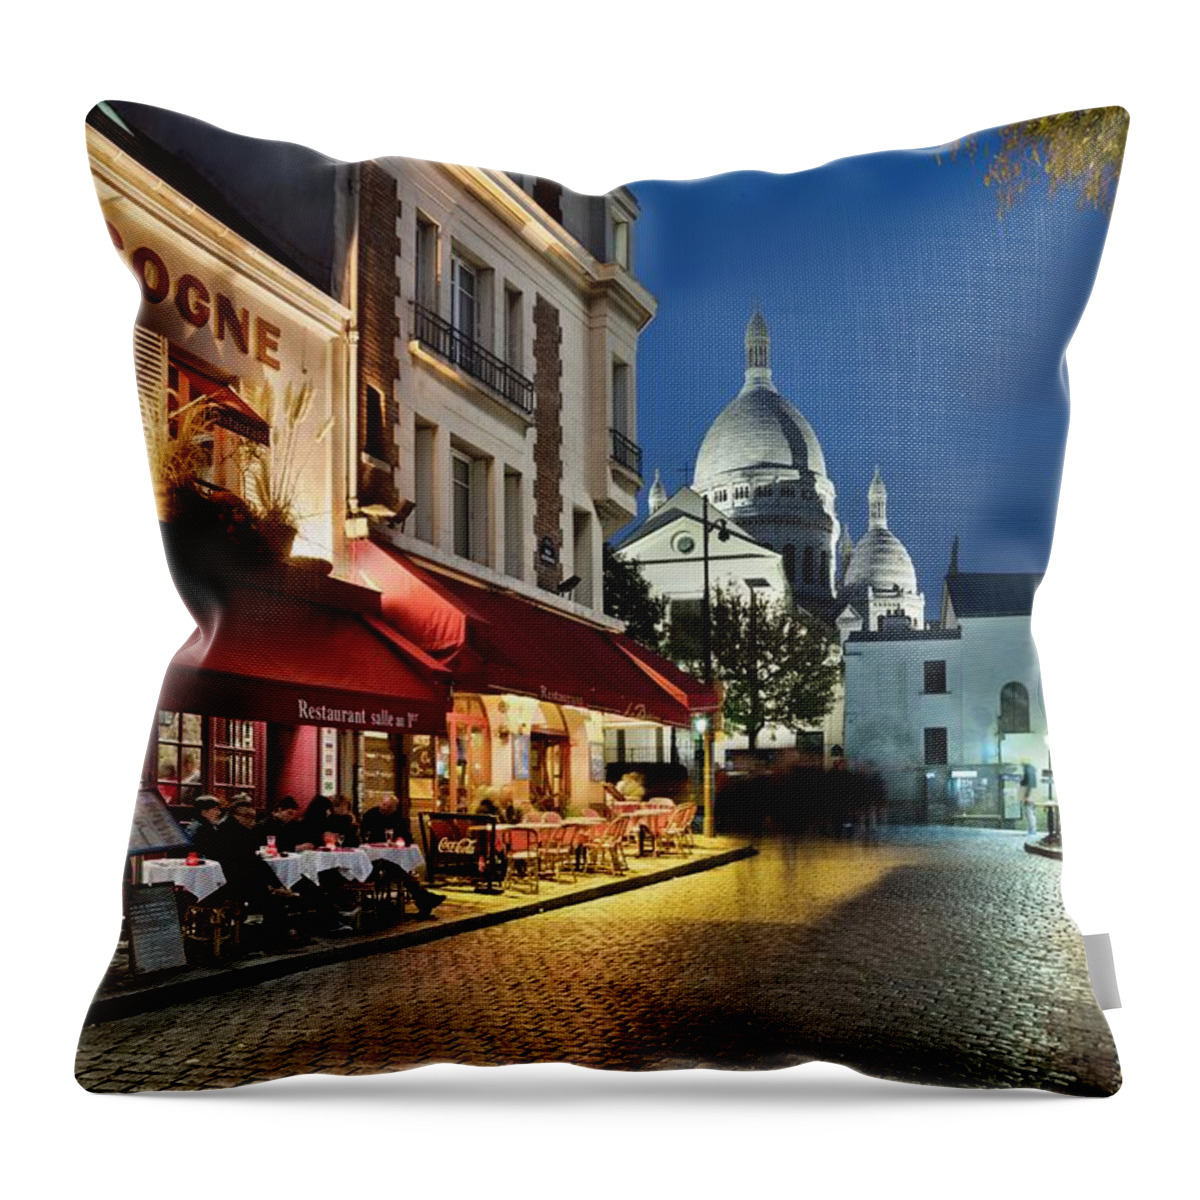 Estock Throw Pillow featuring the digital art Sacre Coeur & Montmartre In Paris by Massimo Ripani